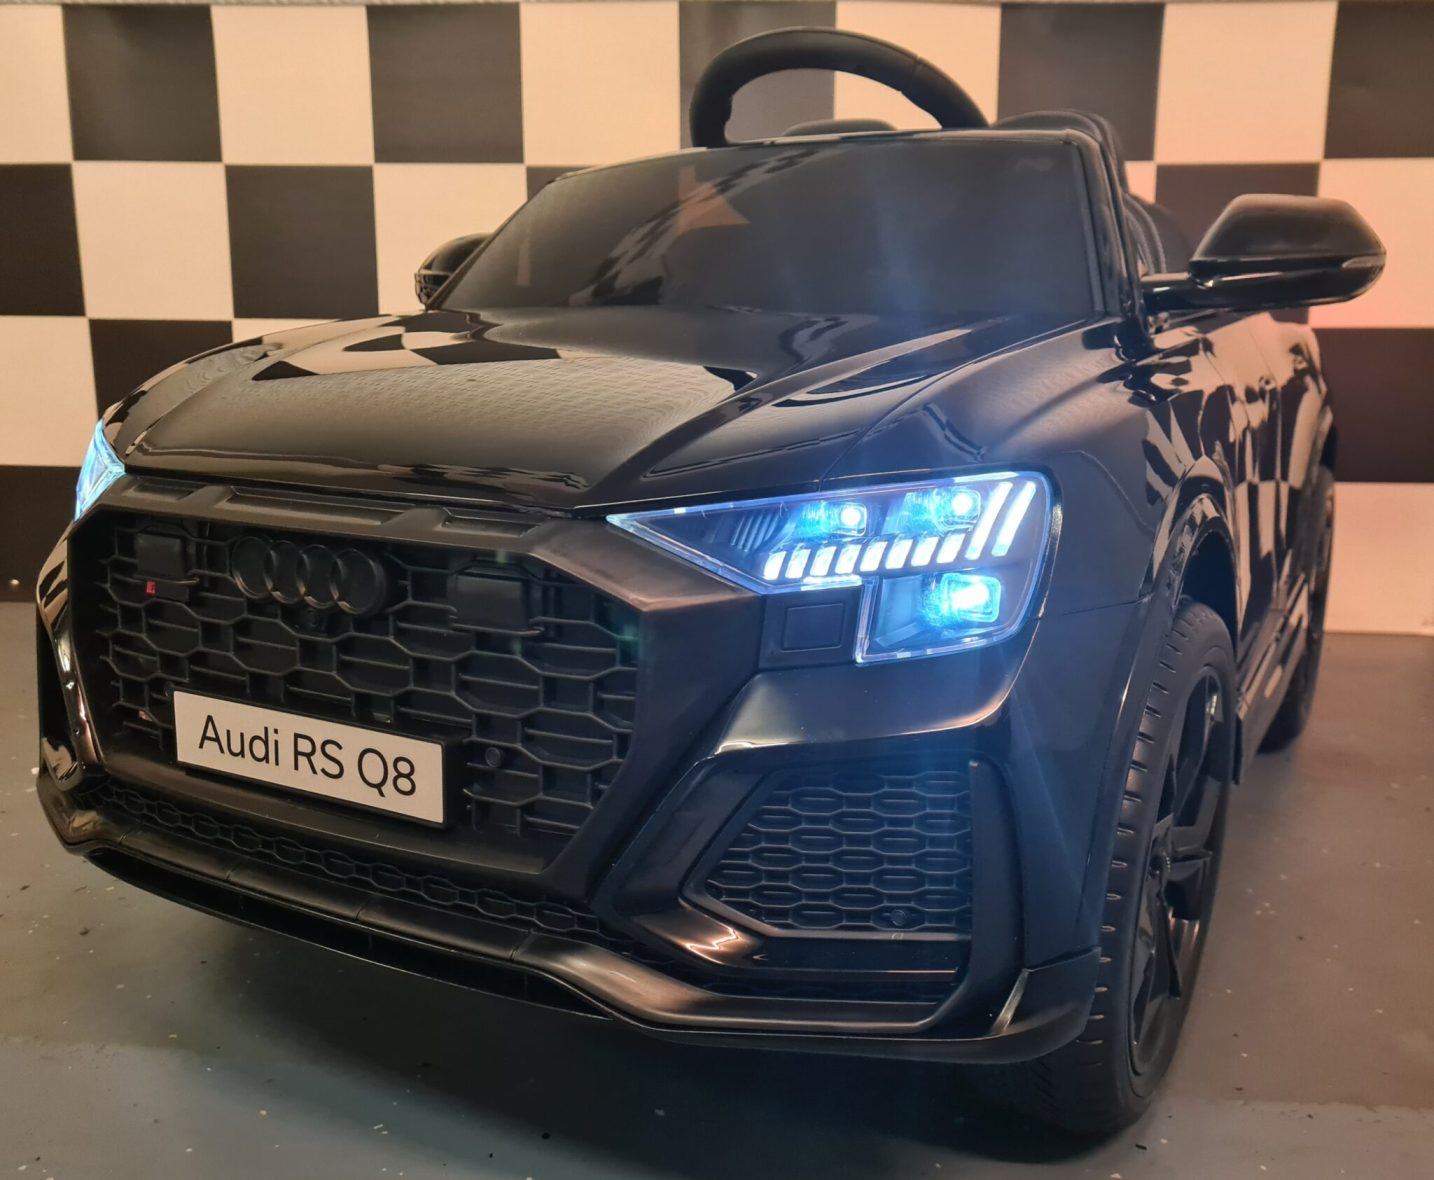 Audi Q8 Electric Children’s Car Metallic Black